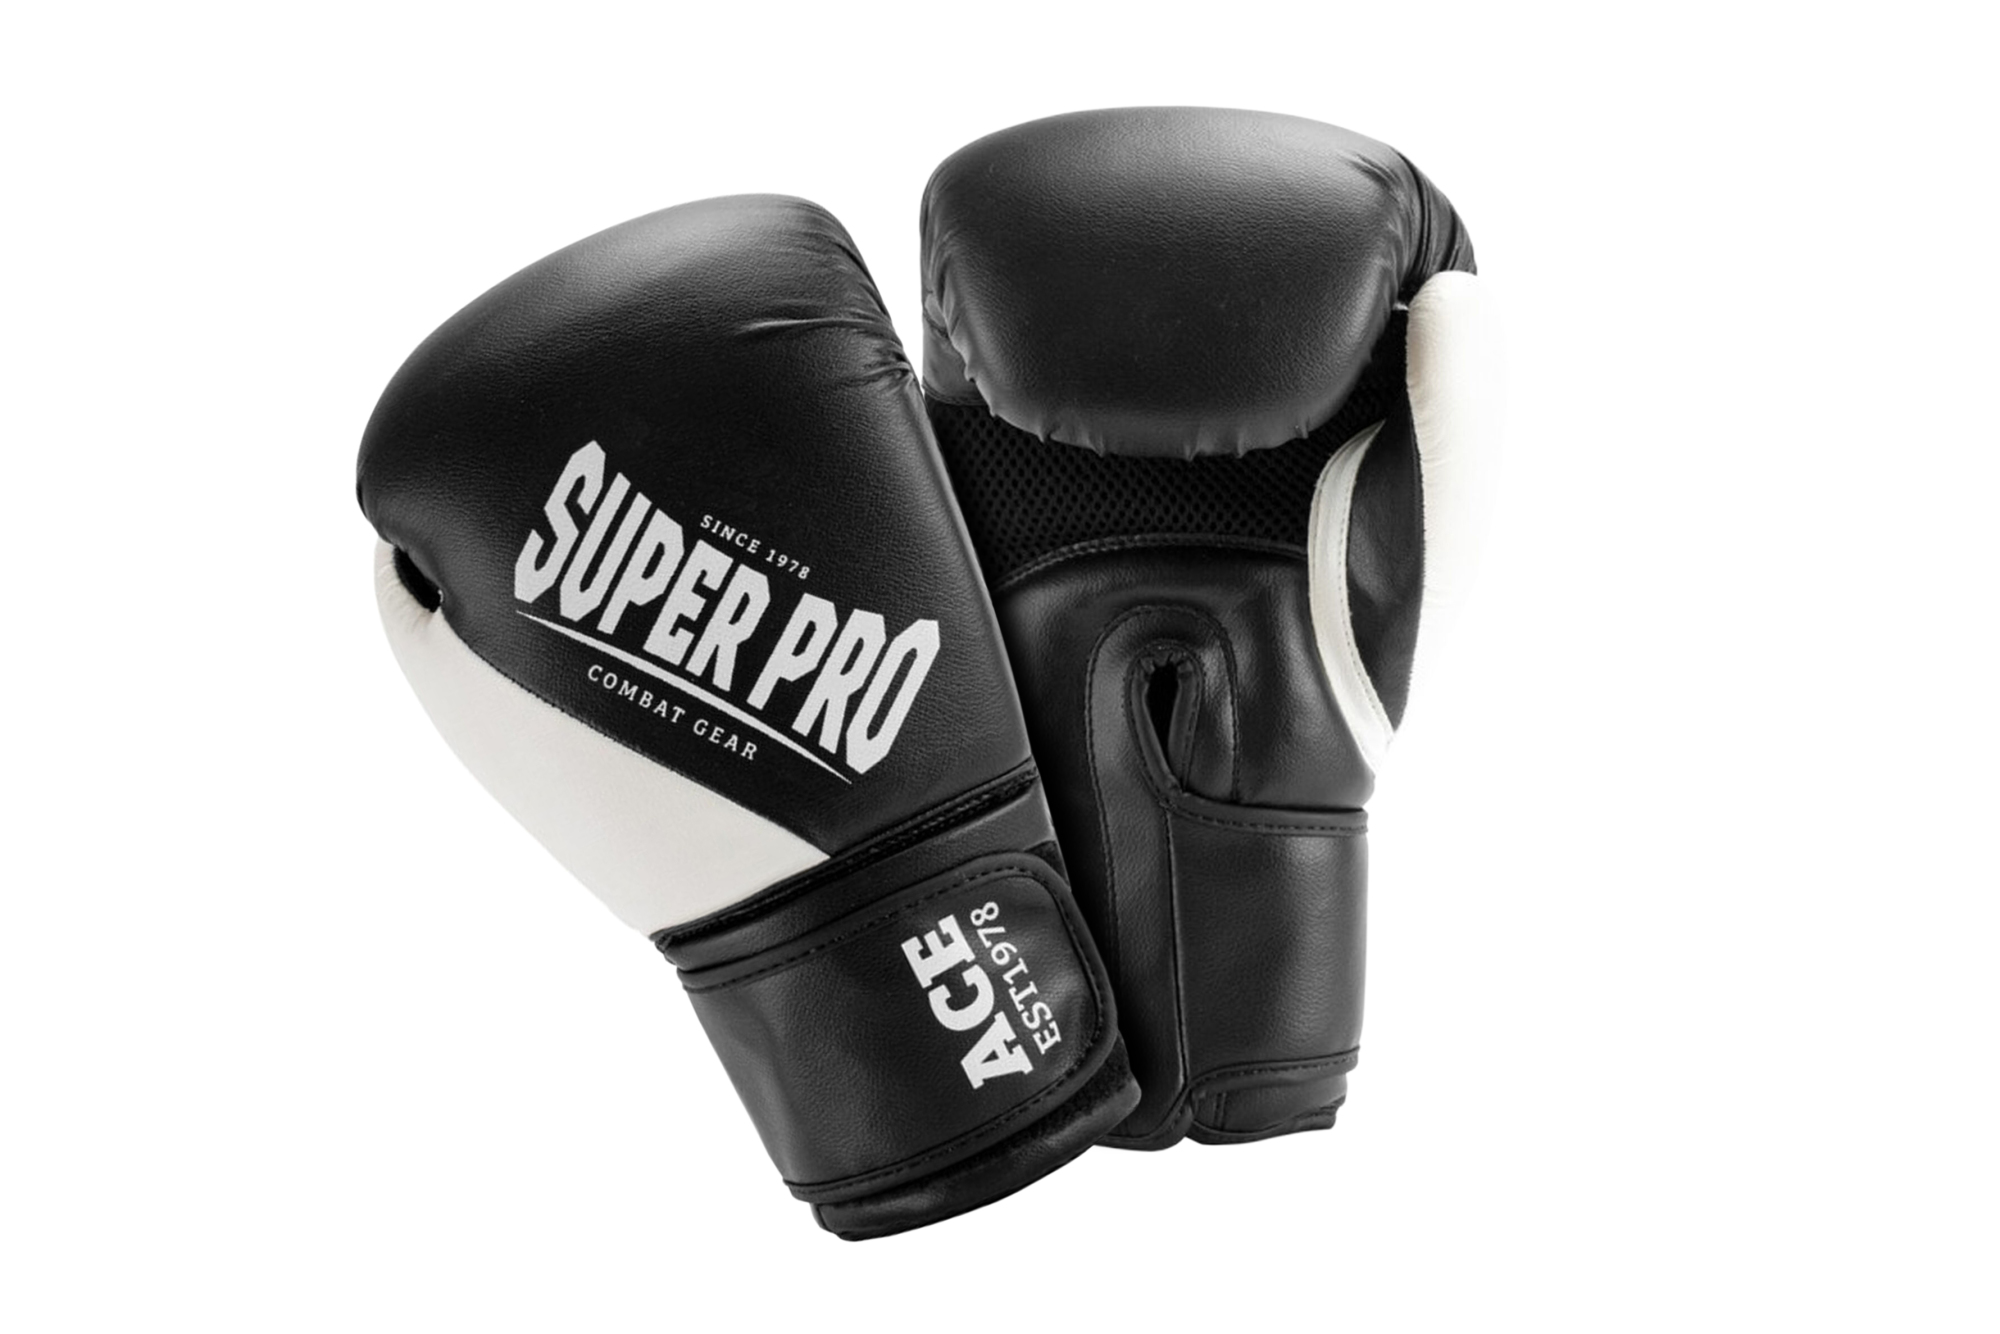 Super ACE Helisports Gear oz Gloves - Black/White Pro Combat 14 Boxing